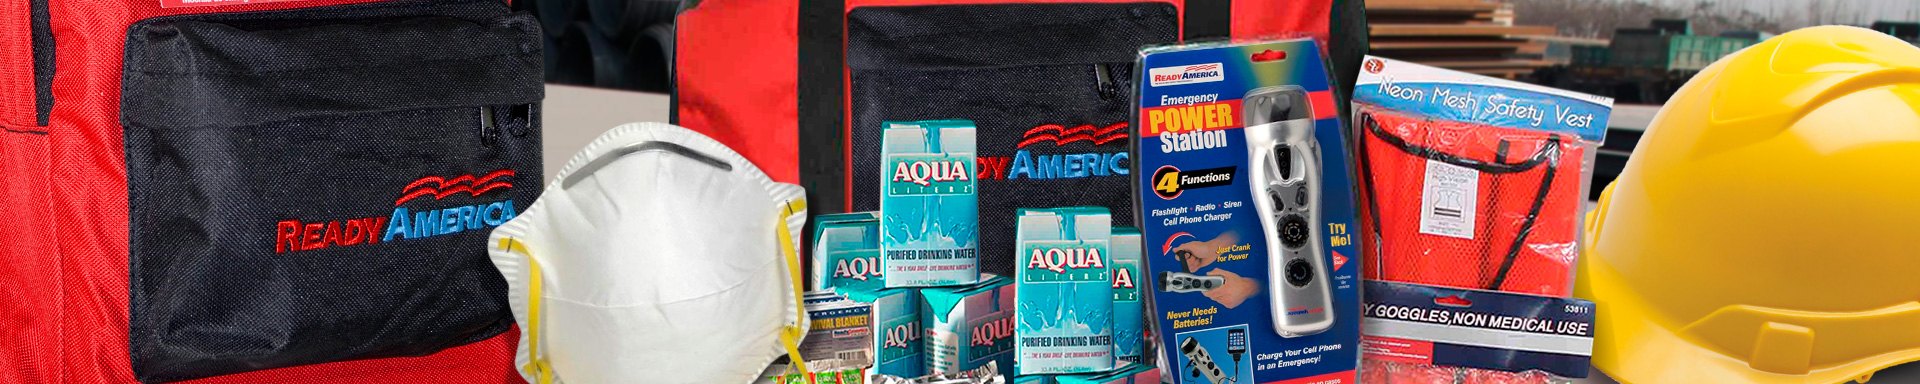 Ready America First Aid Kits